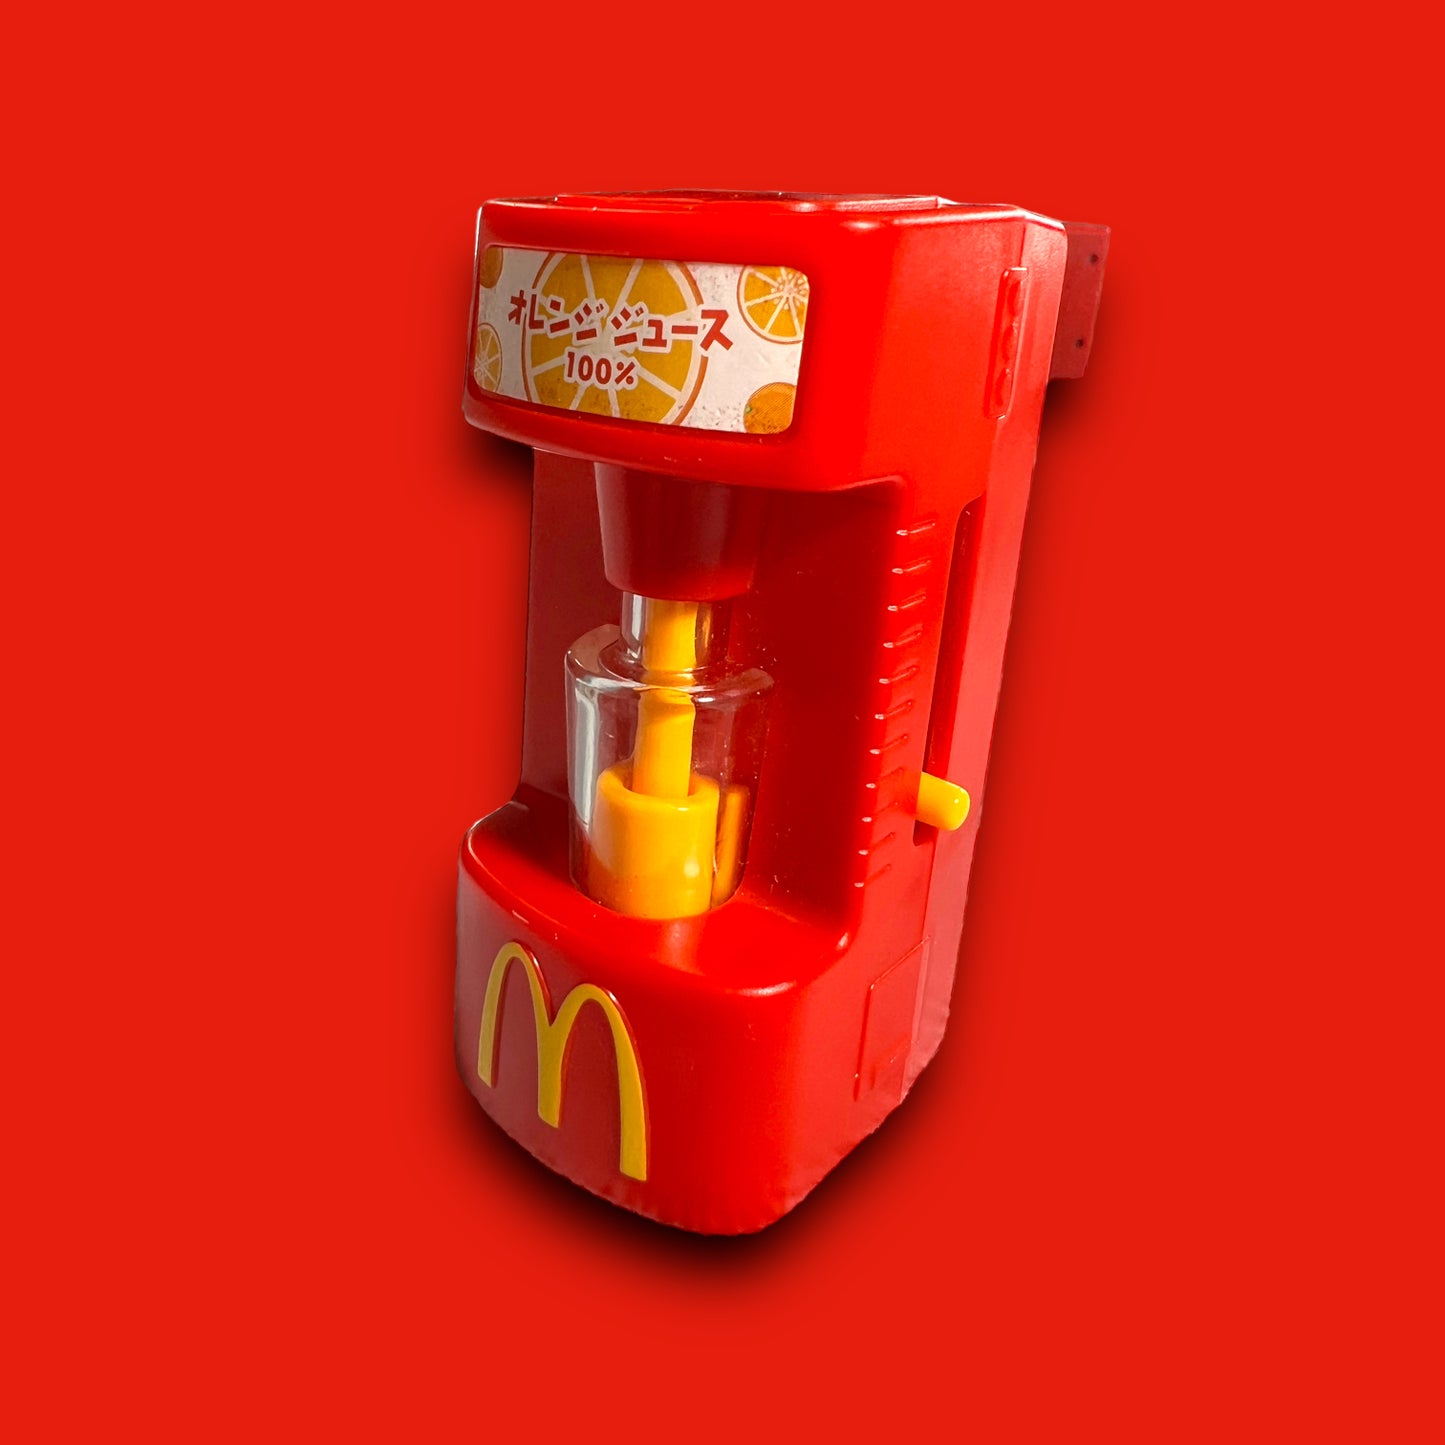 McDonald's Japan Narikiri Orange Juice Machine Toy (McDonald's 2019)